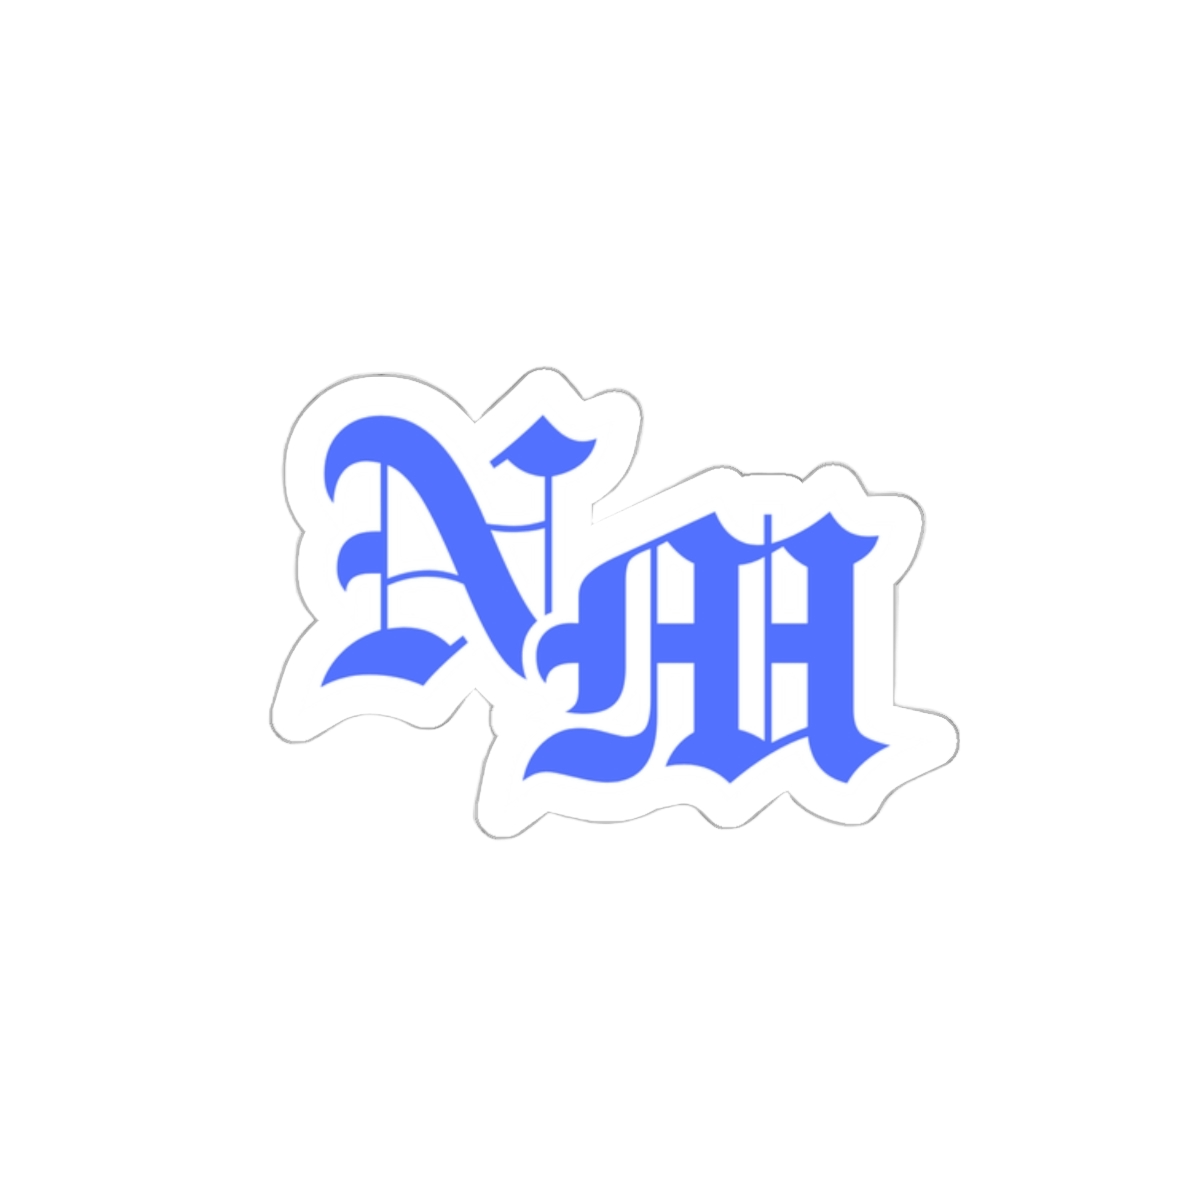 NM Logo Sticker